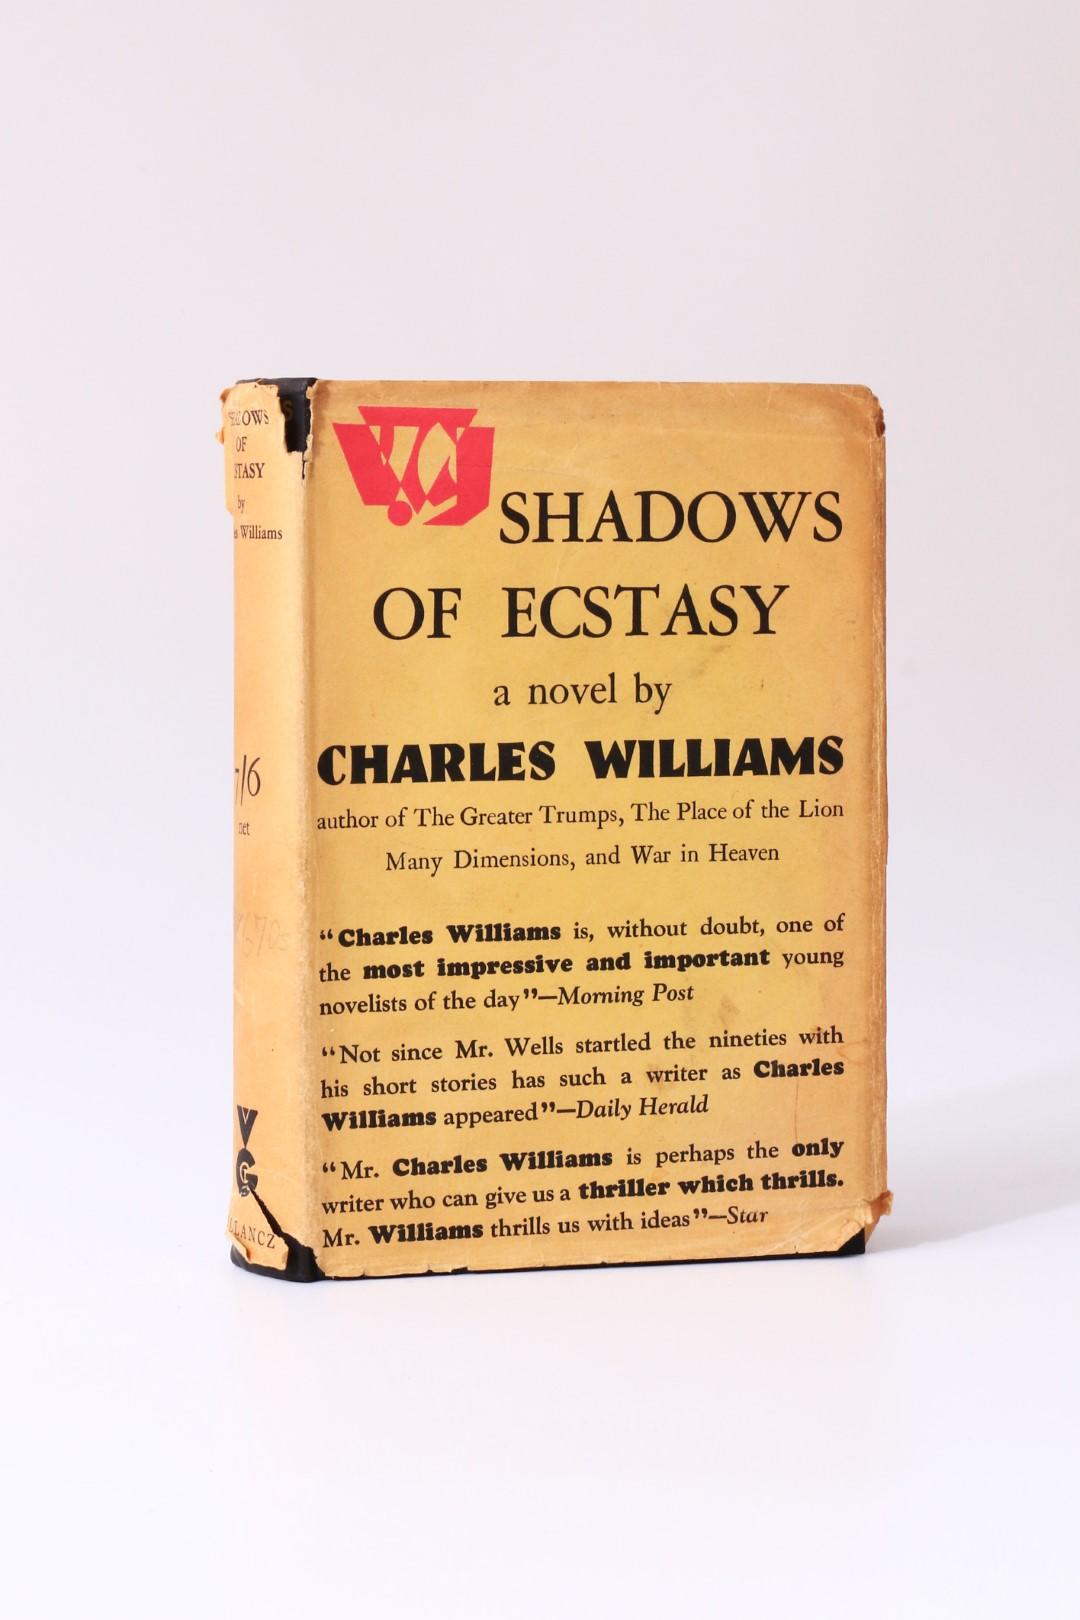 Charles Williams - Shadows of Ecstasy - Gollancz, 1933, First Edition.